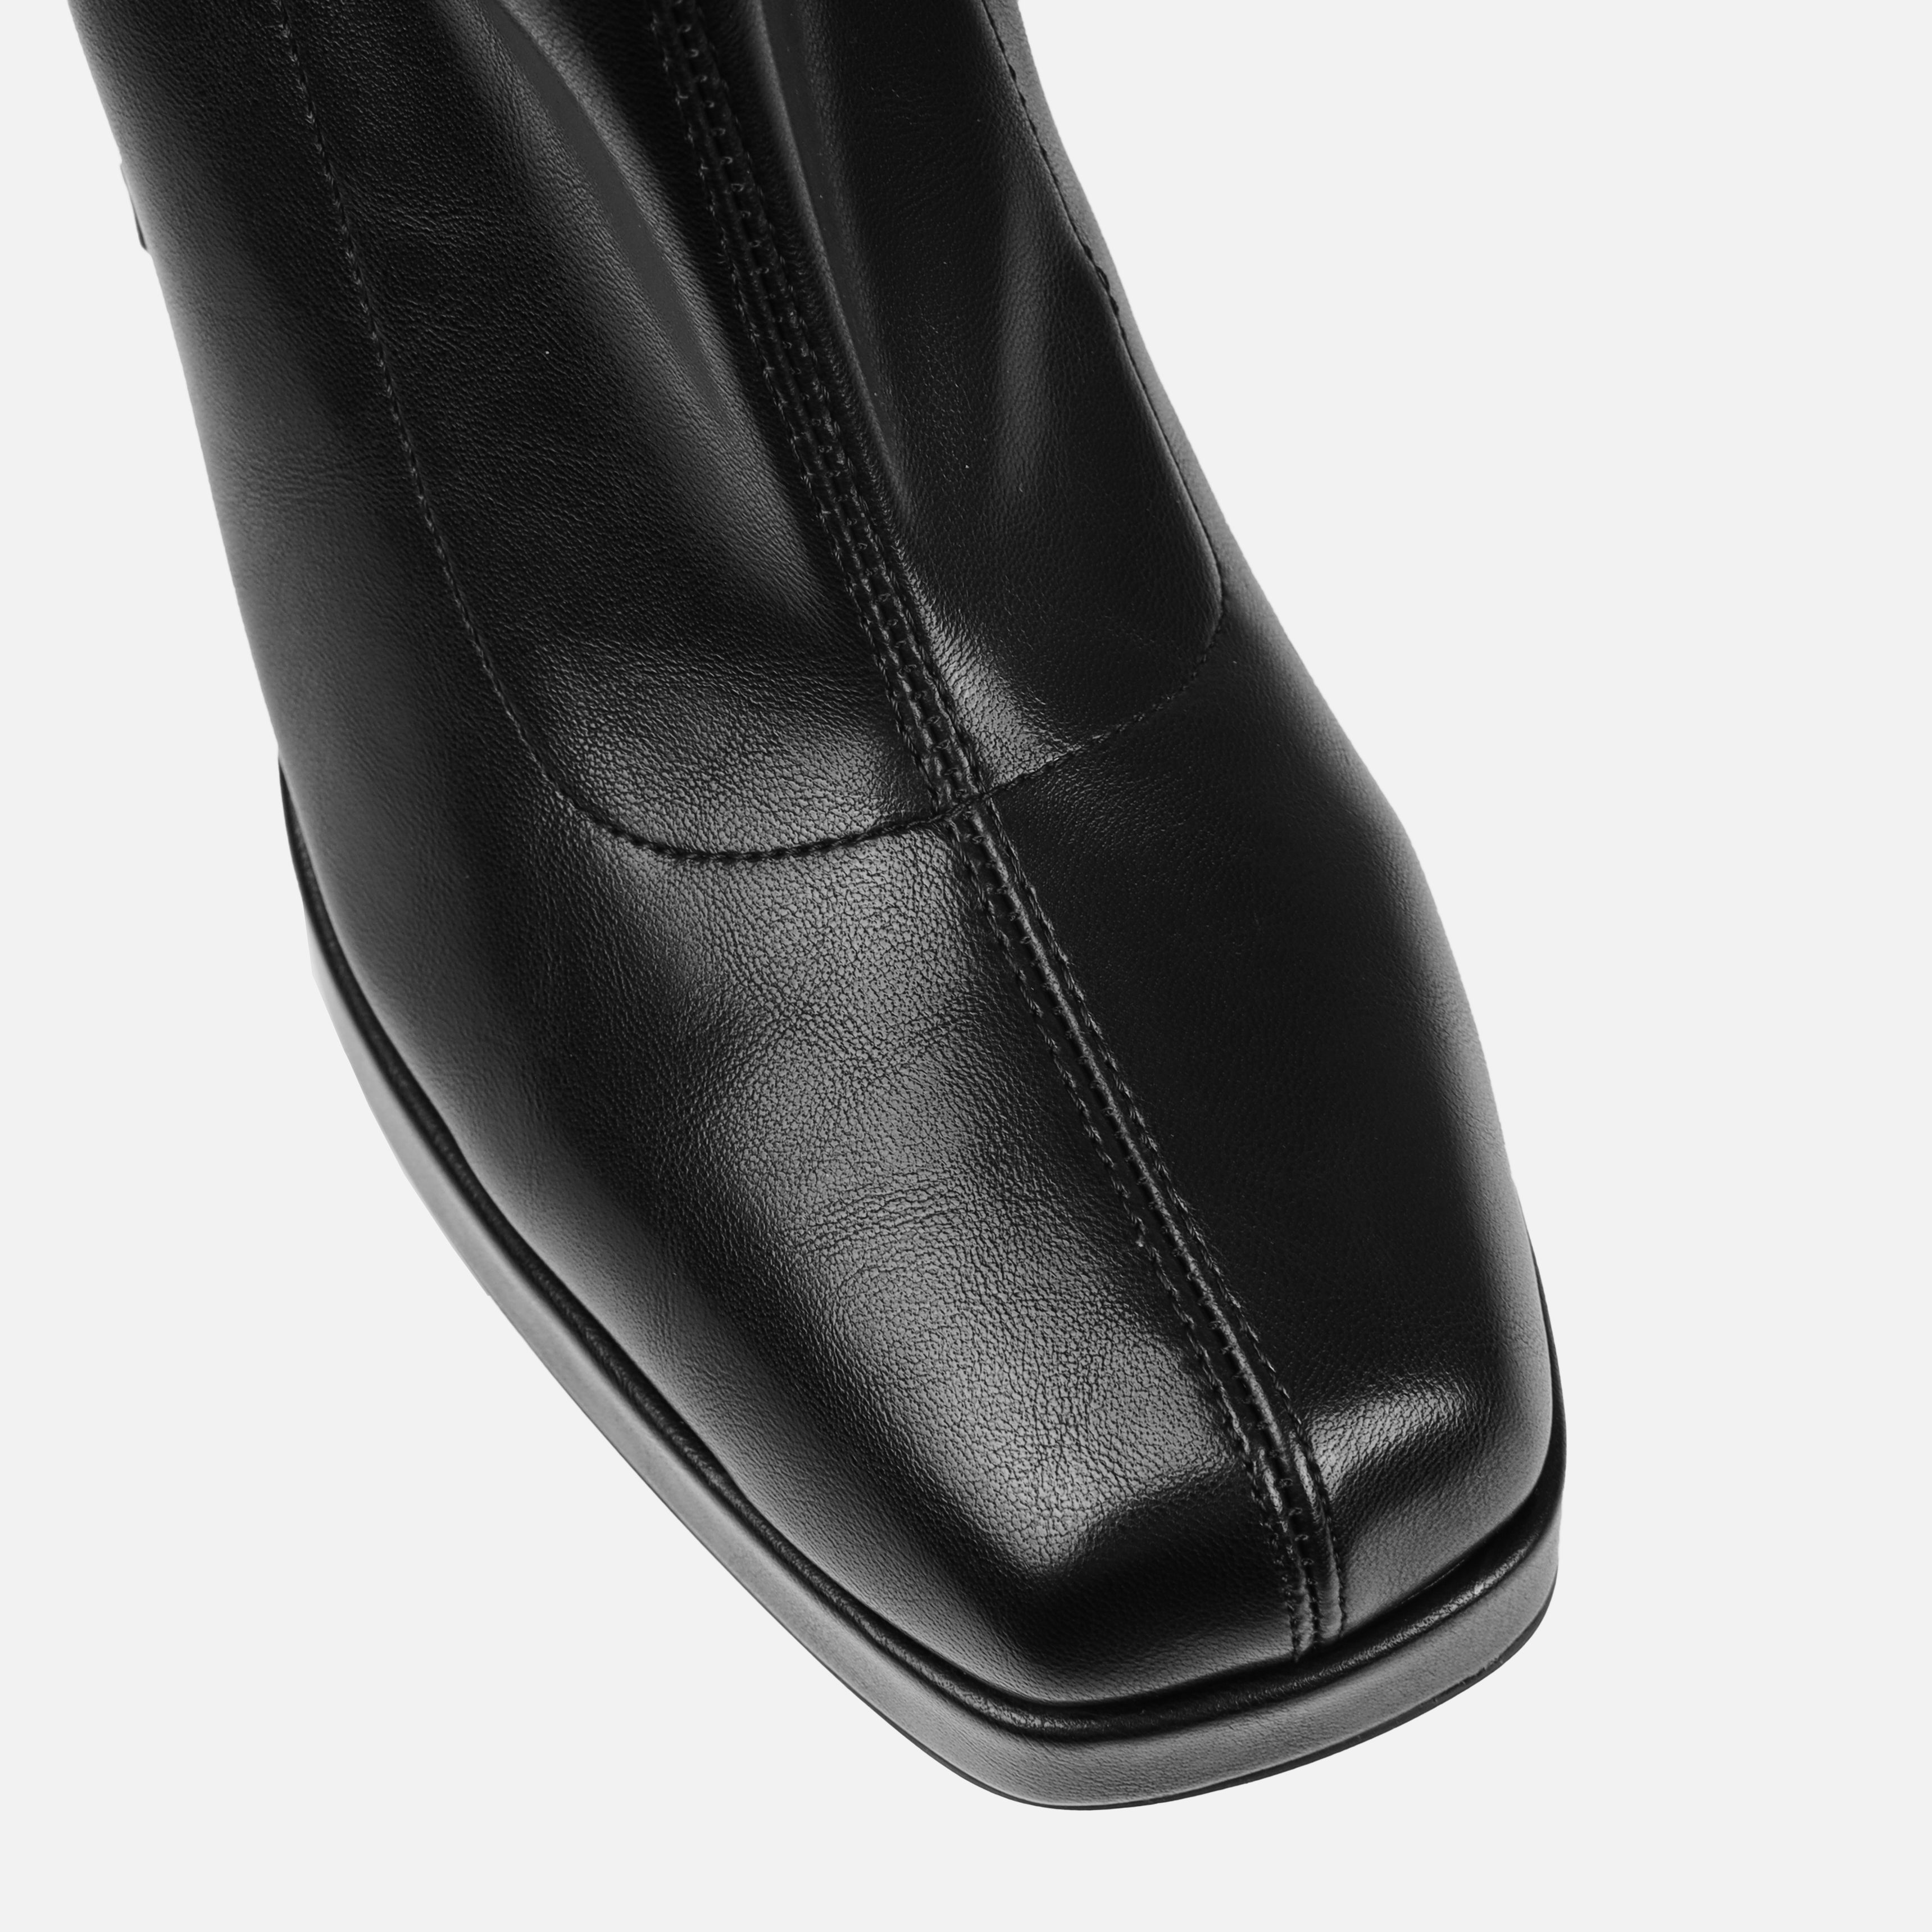 Aviva Black Platform Block Heel Thigh High Boots | SIMMI London